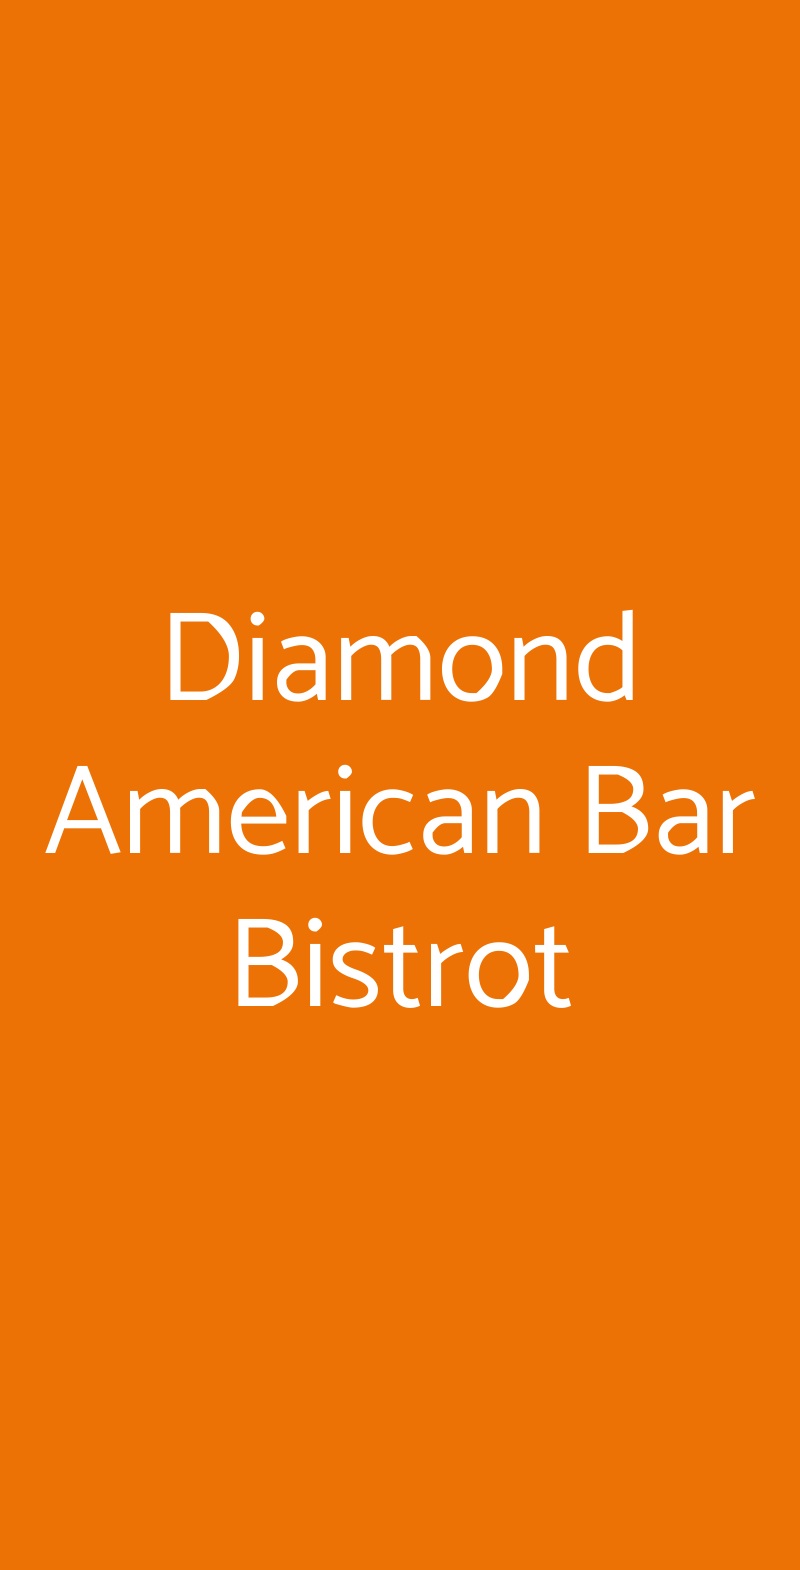 Diamond American Bar Bistrot Bologna menù 1 pagina